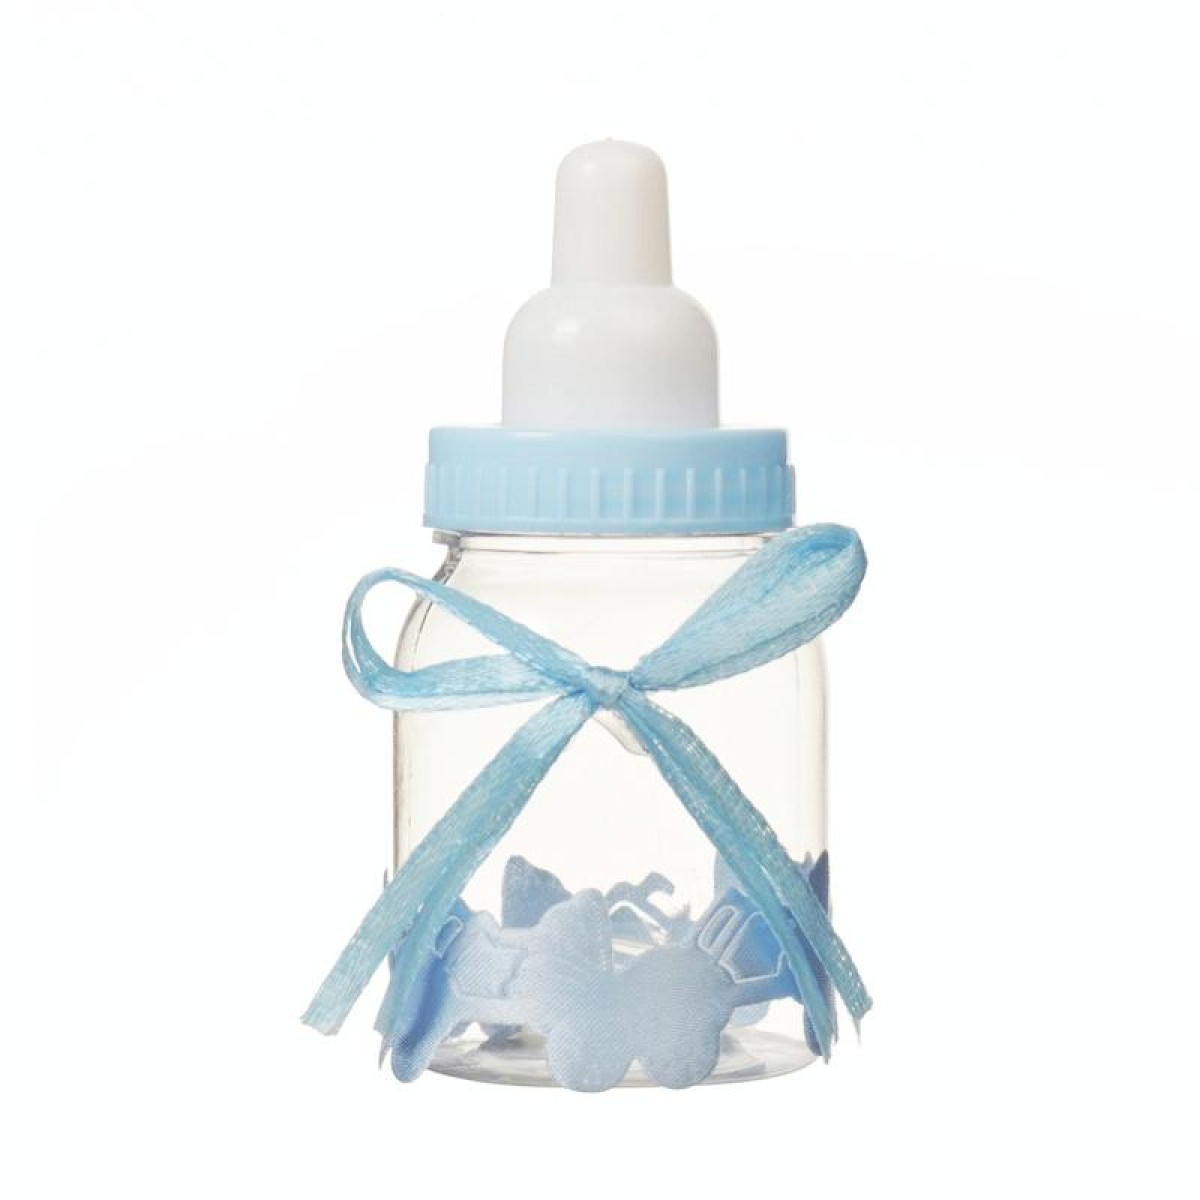 12 PCS Cute Nursing Bottle Wedding Candy Gift Box, Size:9x4cm(Blue)